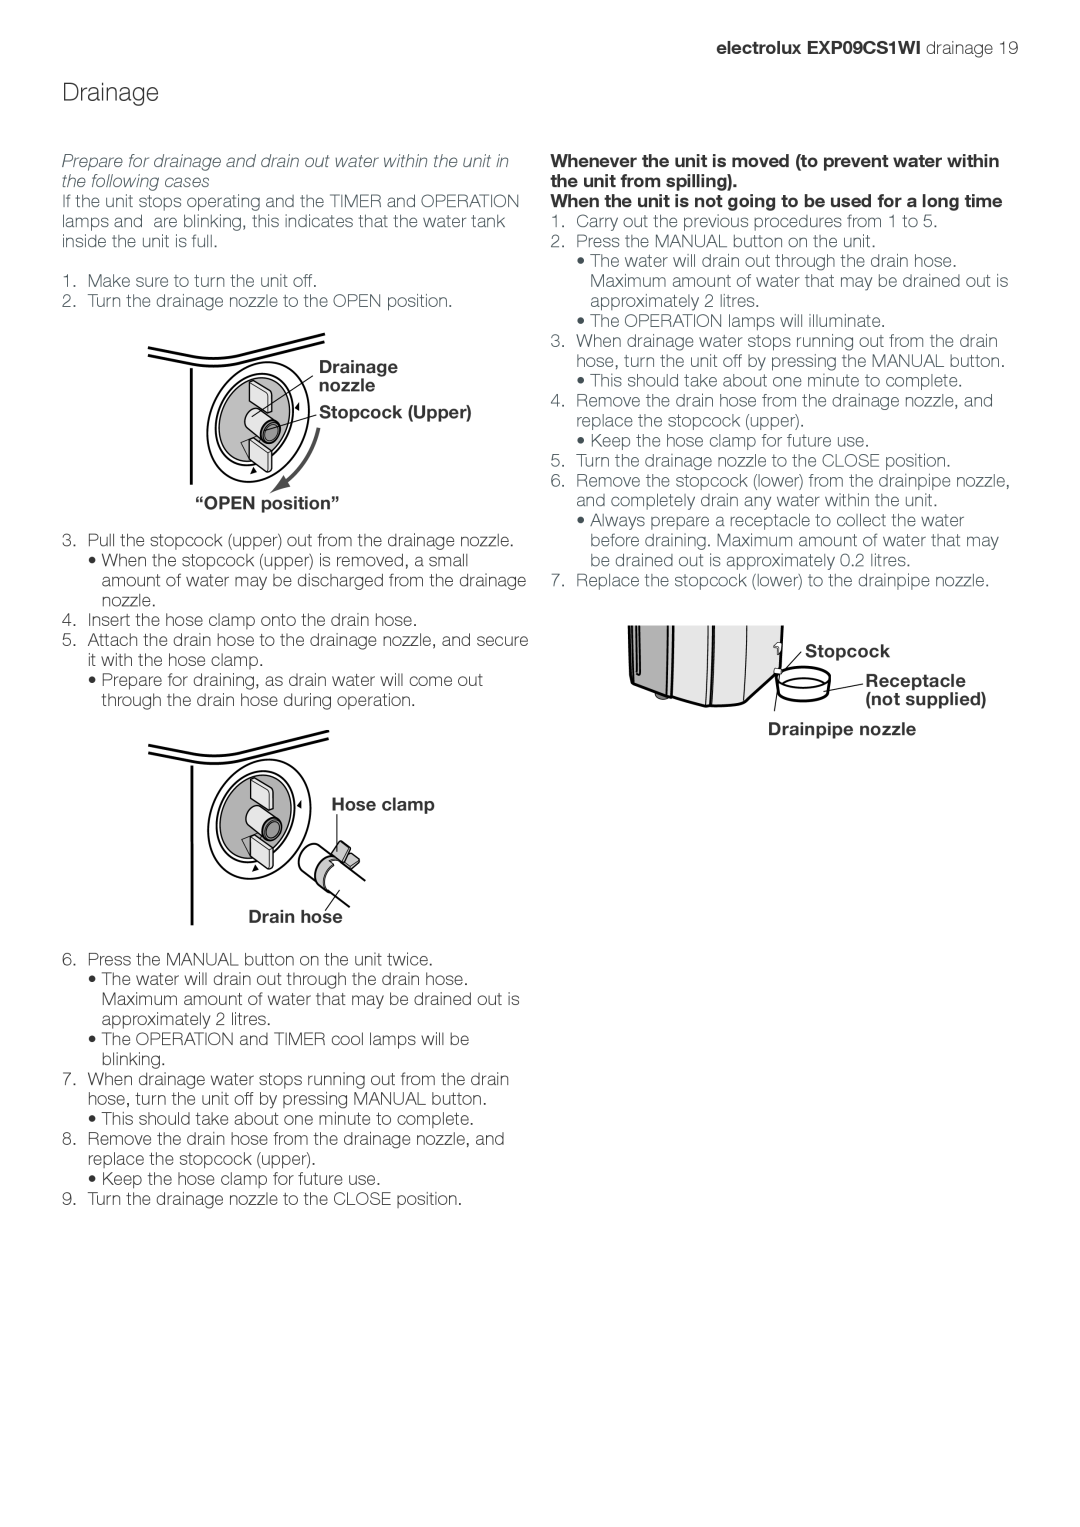 Electrolux LU4 9QQ user manual Drainage nozzle Stopcock Upper “OPEN position”, Hose clamp Drain hose 